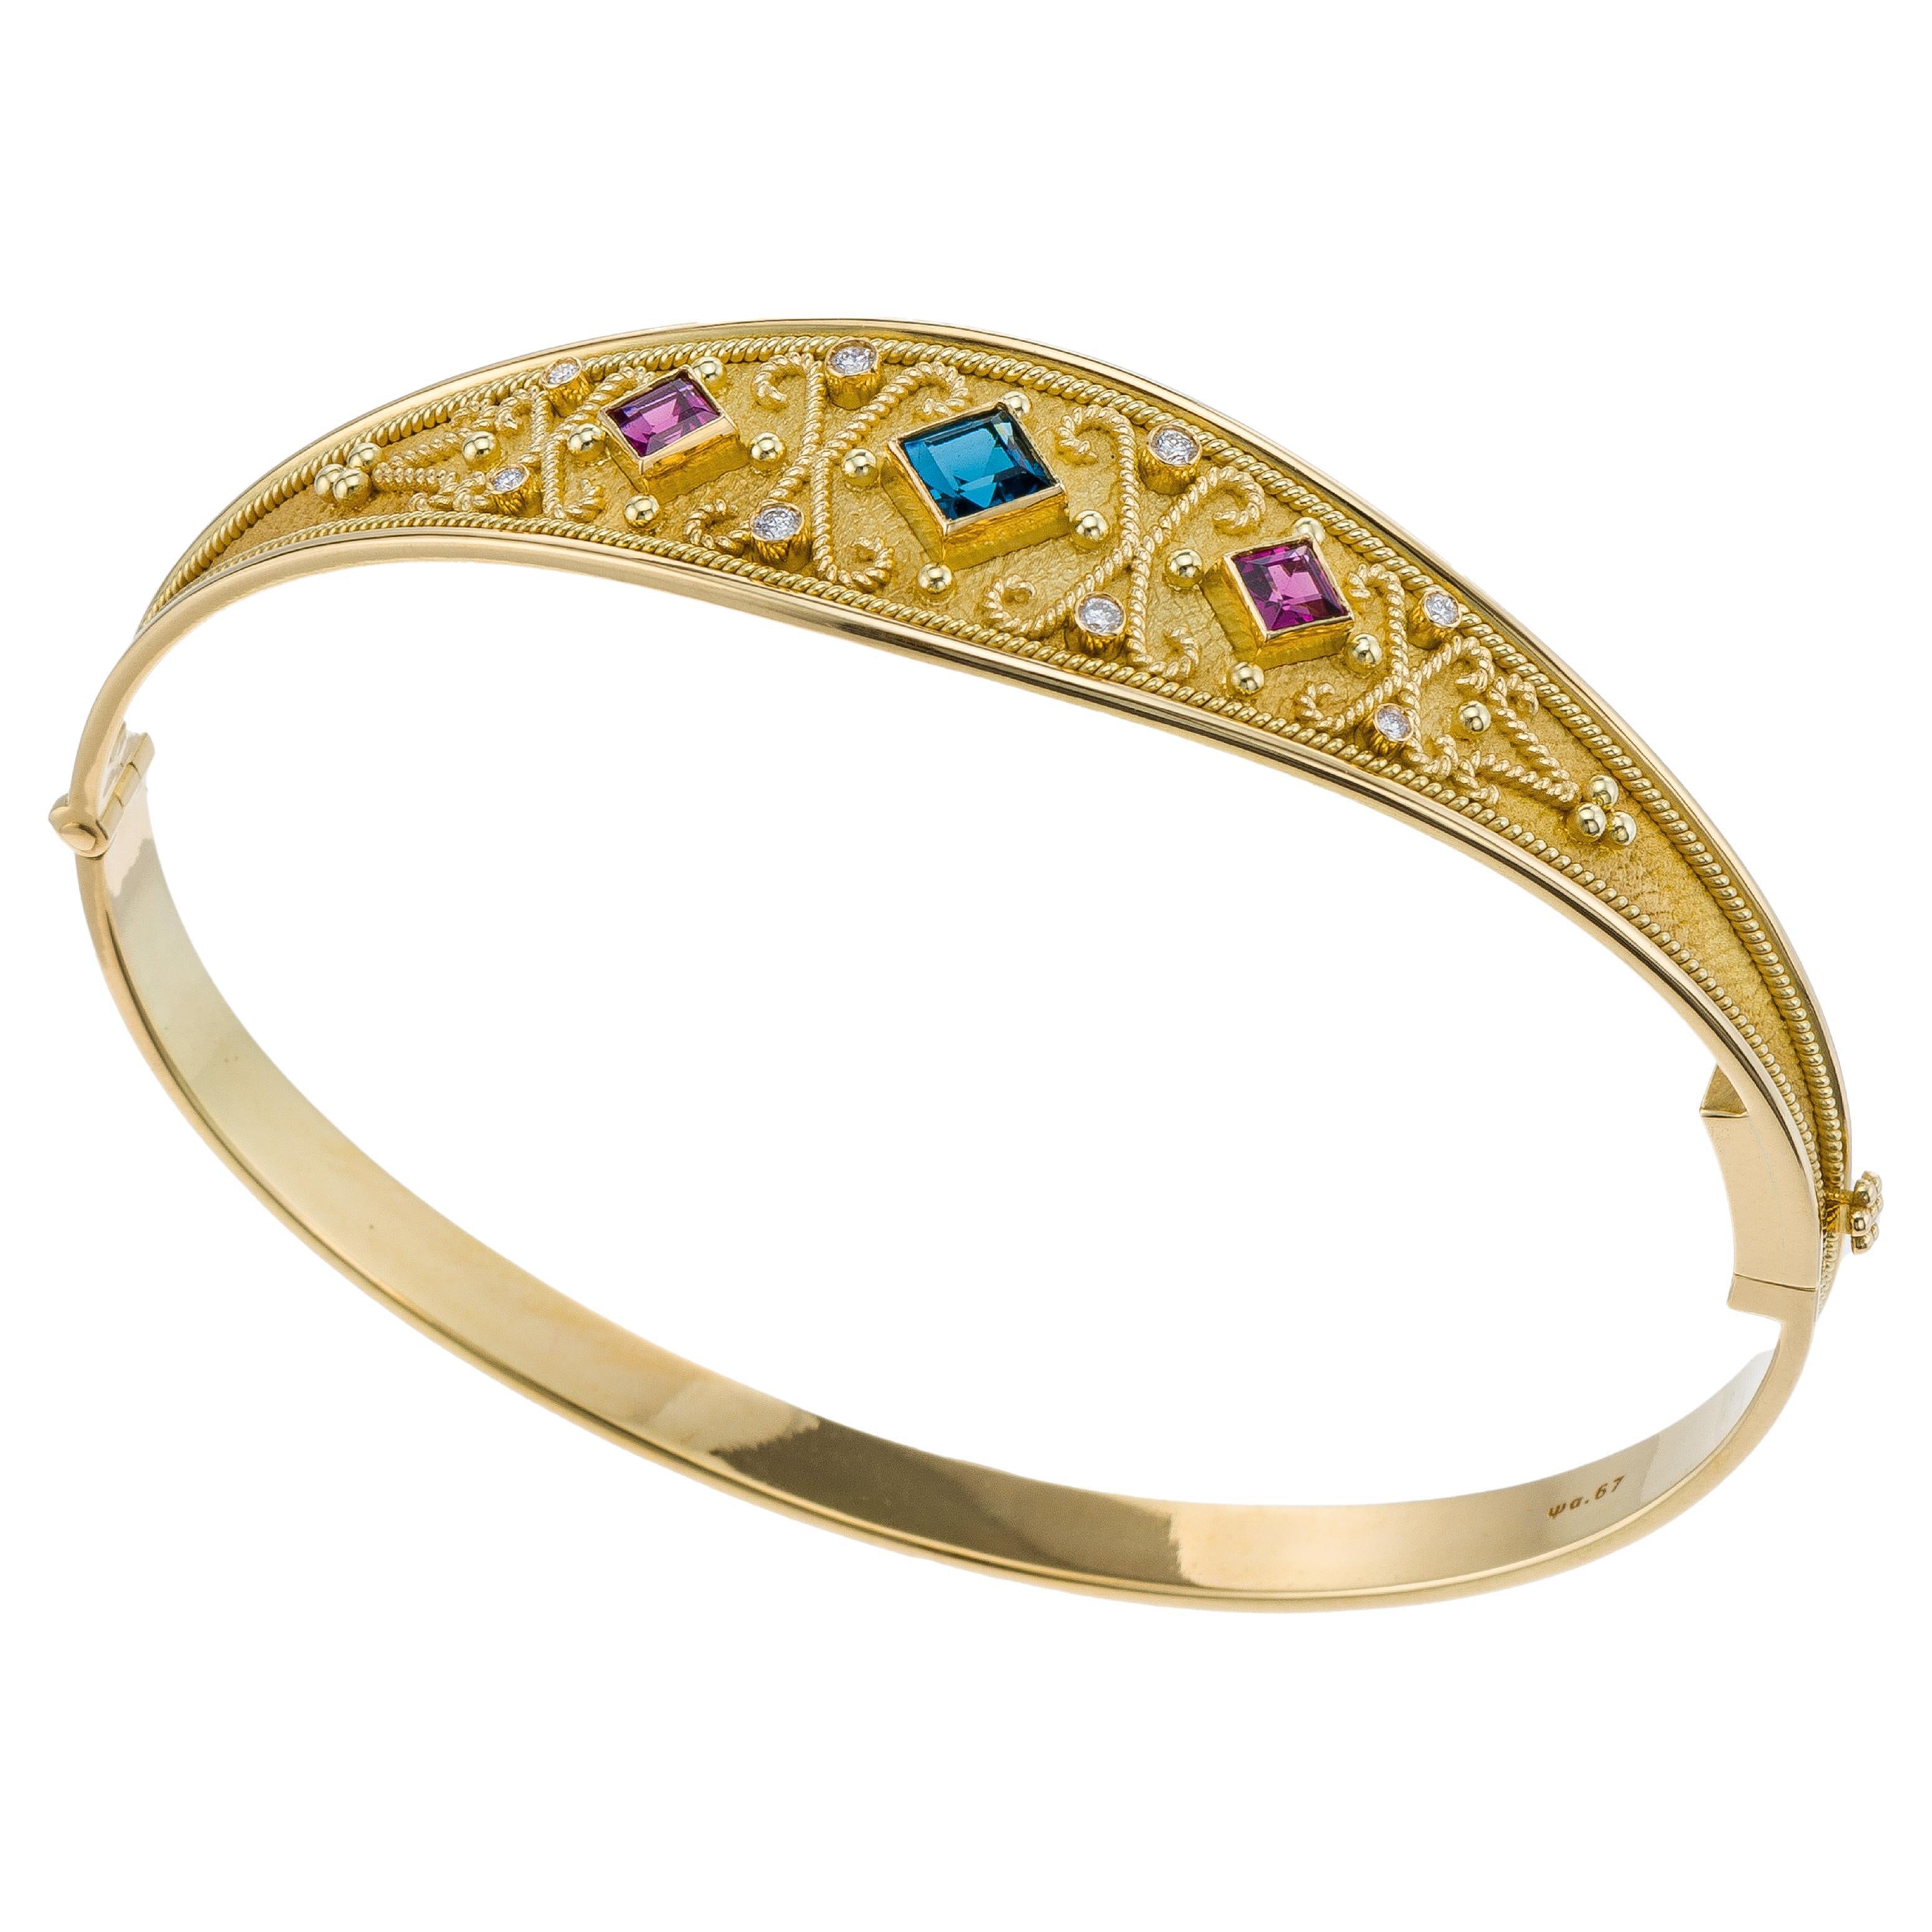 What is a Byzantine bracelet?